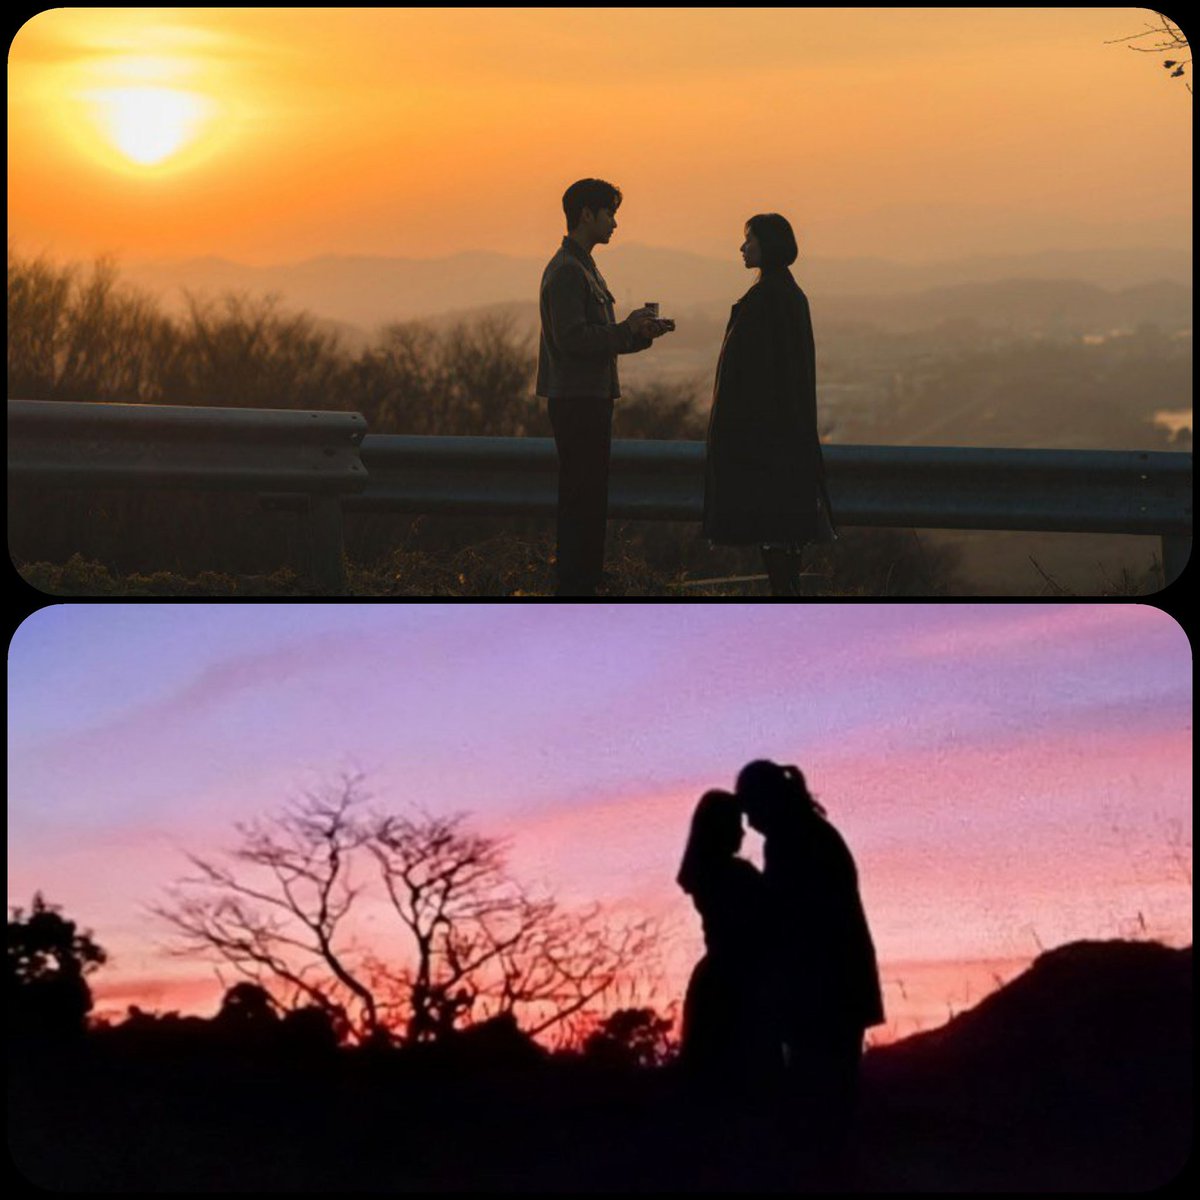 Sunset Lovers ❤ I love these silhouette pics.🫶 #BaekHong X #BarDa #QueenOfTears #MCAI